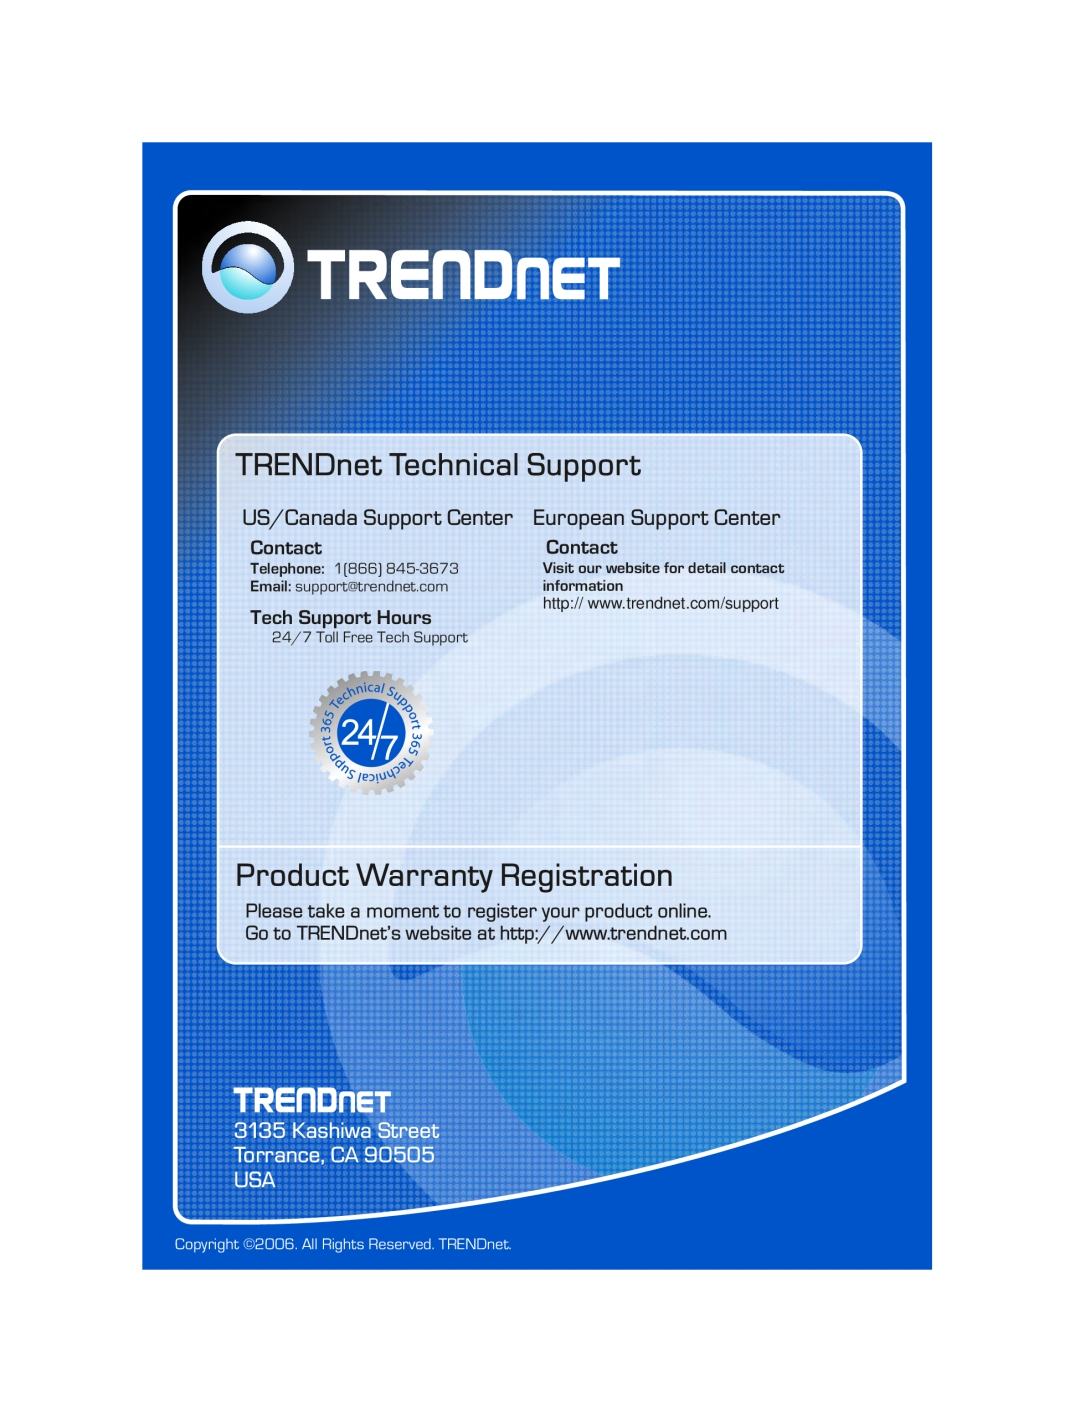 TRENDnet TEW-428UB TRENDnet Technical Support, Product Warranty Registration, Kashiwa Street Torrance, CA USA, Contact 